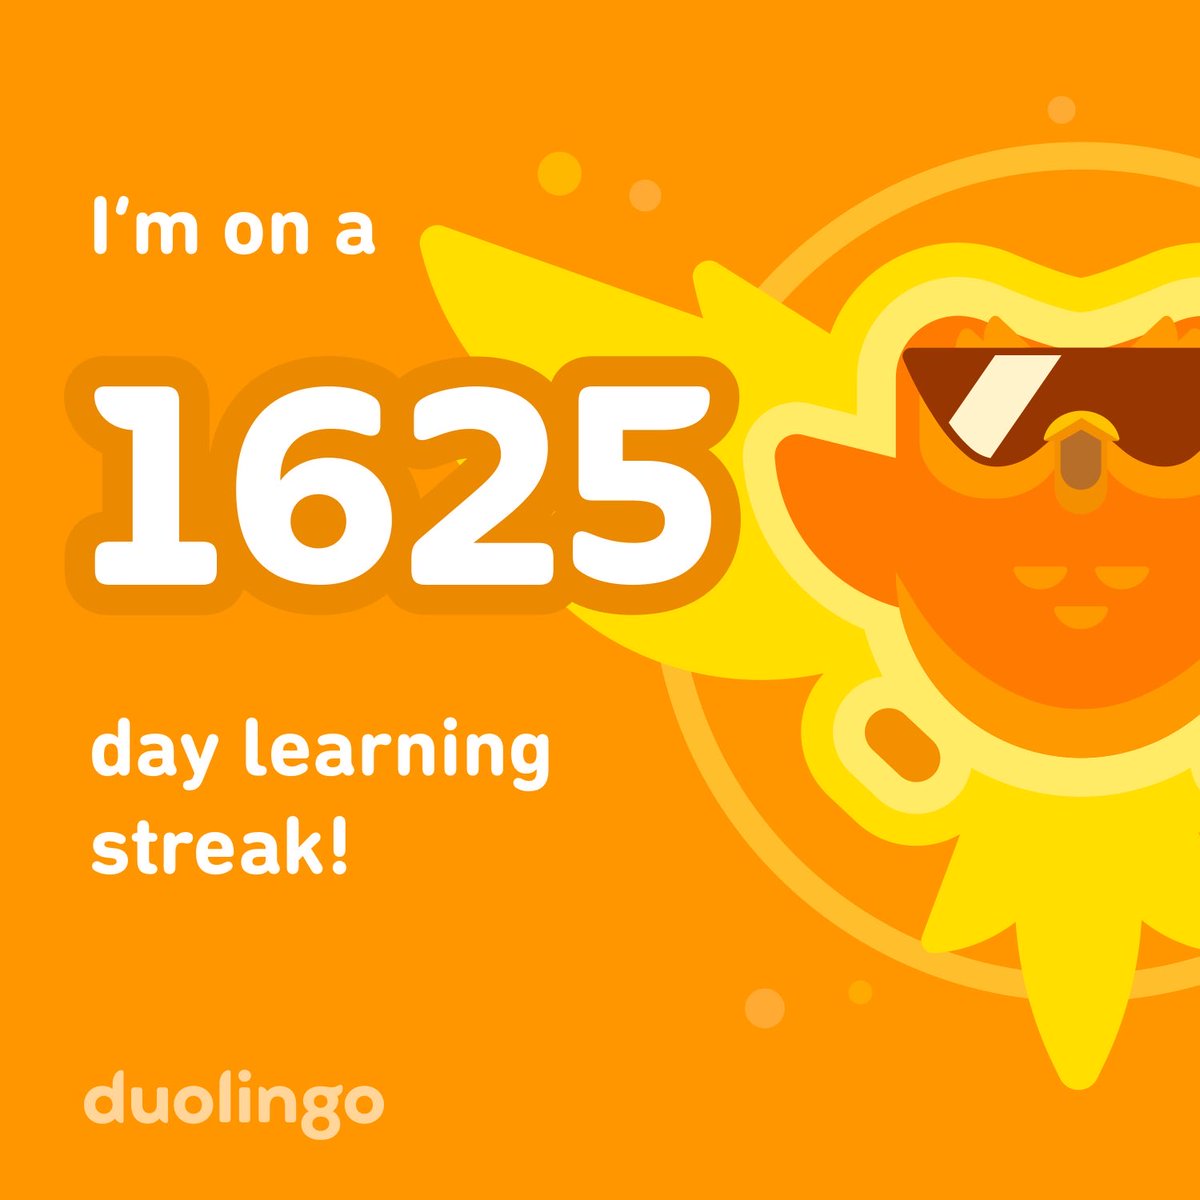 Woah! I’m on a streak of 1625 days while using Duolingo! That was very kickass for me! 🔥🔥🔥
#duolingo #duolingo365